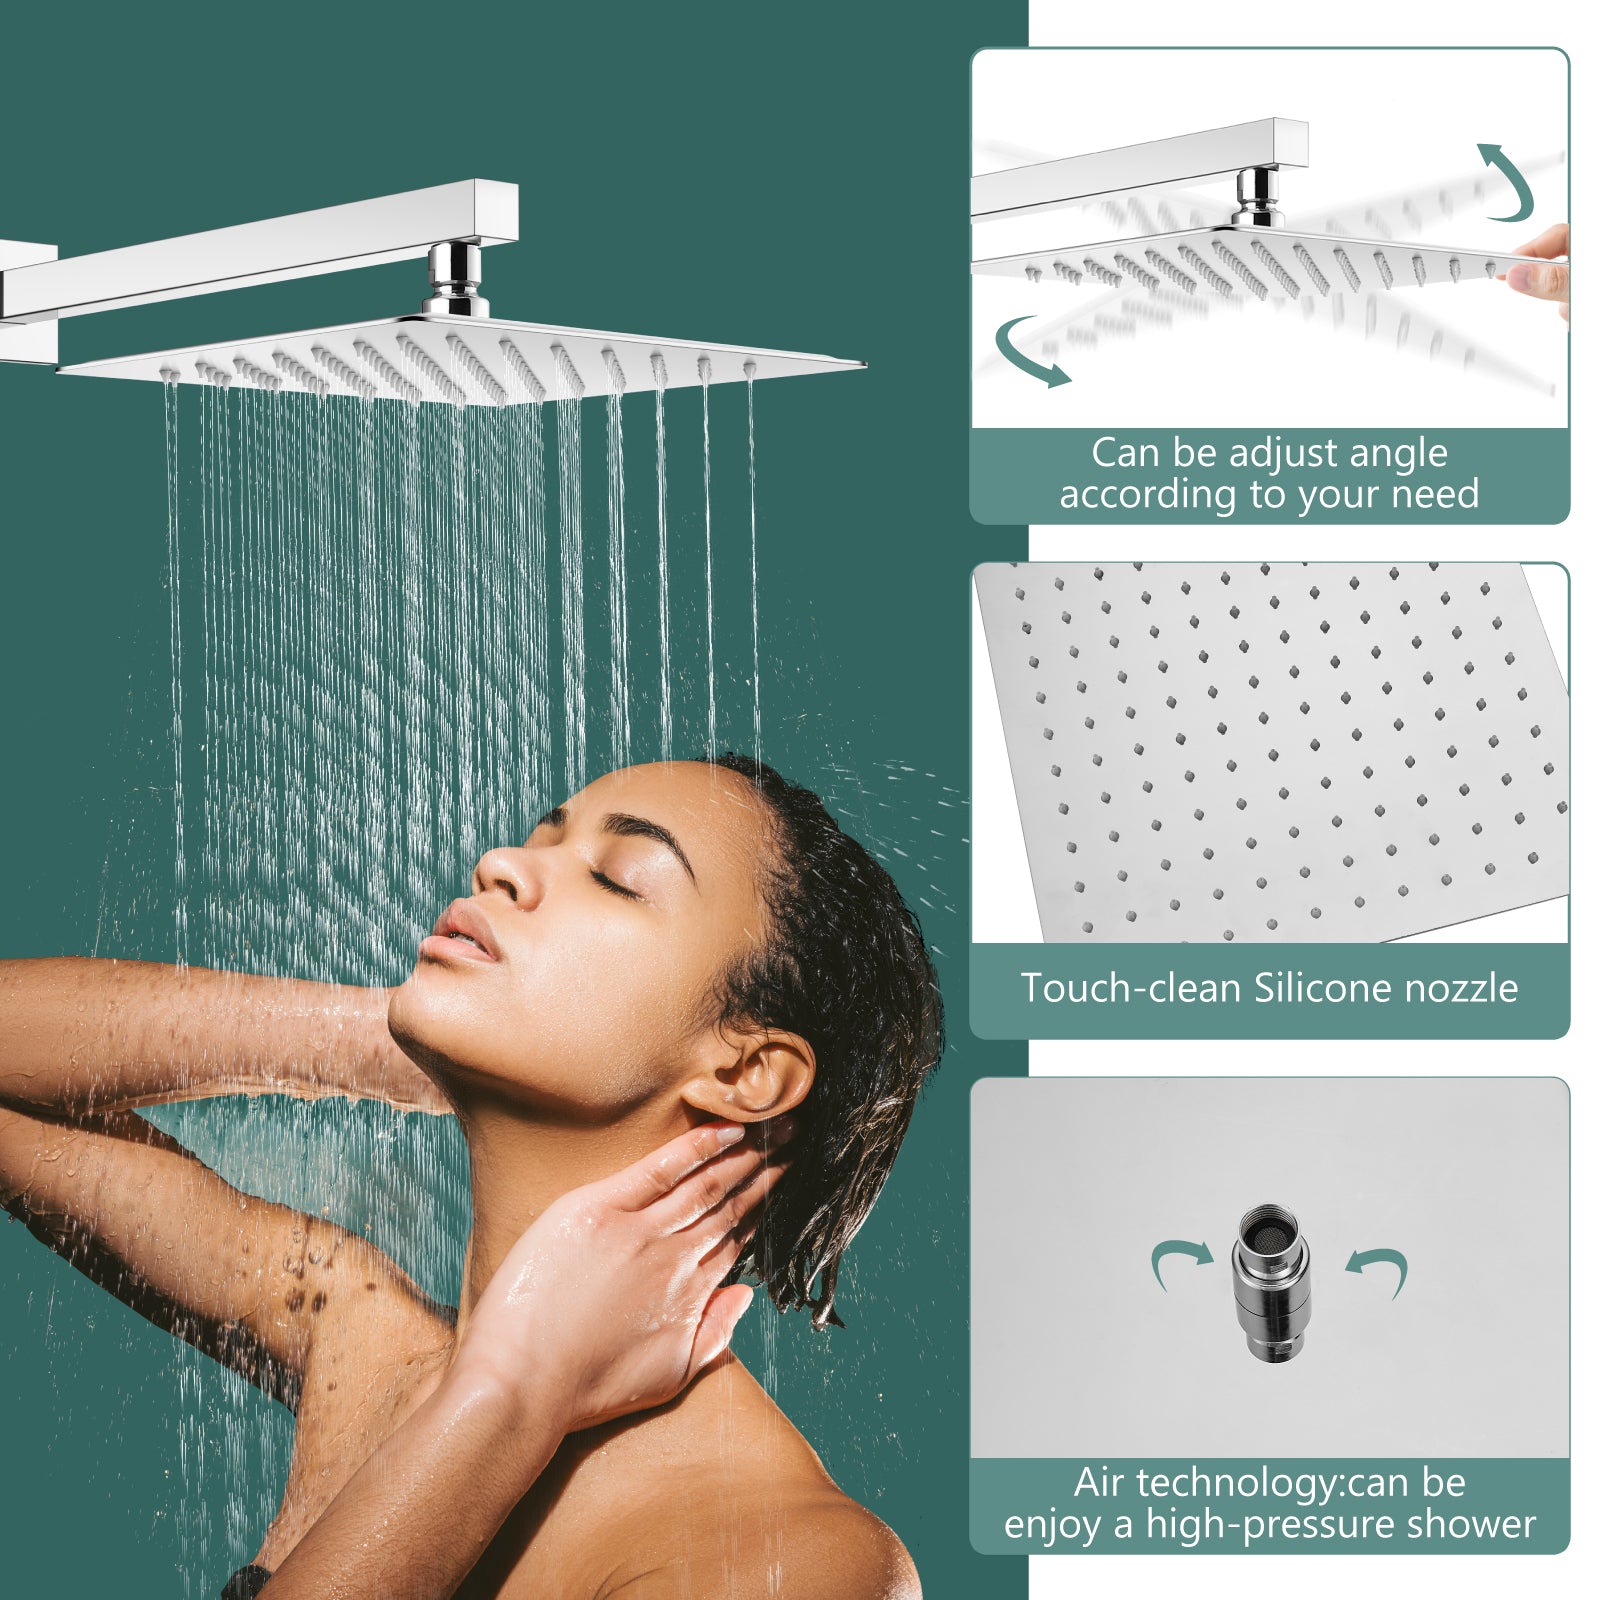 Heyalan Shower System Square Rain Shower System Head Shower Faucet Fixture 2 in 1 Handheld Shower Sprayer Rough in Valve Wall Mount Bathroom Rainfall Combo Set High Pressure